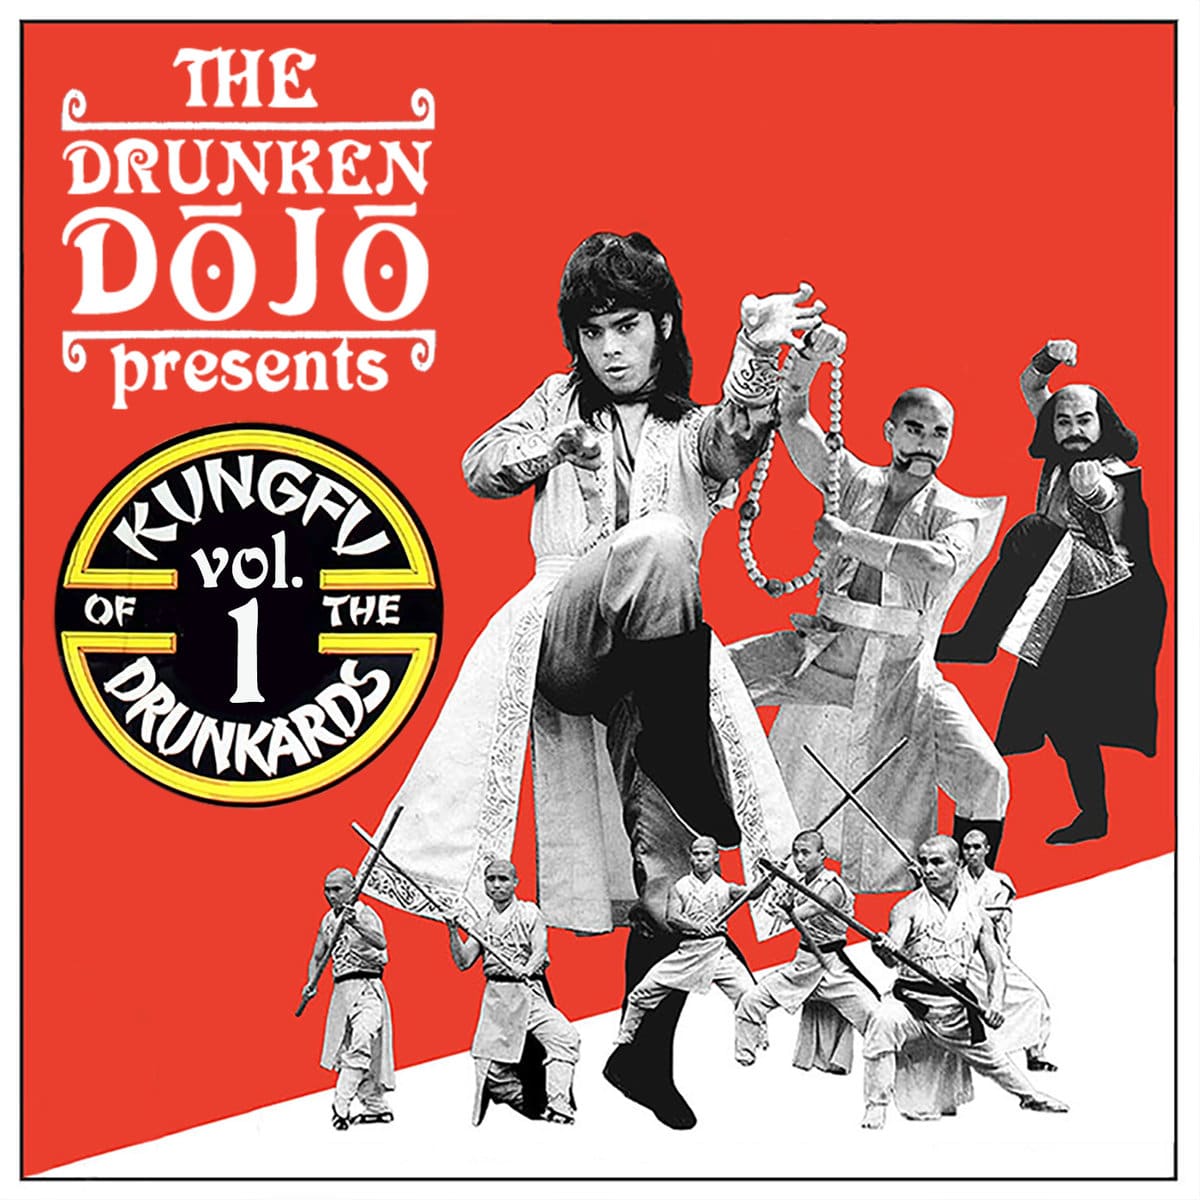 Drunken Dojo - "KungFu of the Drunkards Vol. 1" (Release)